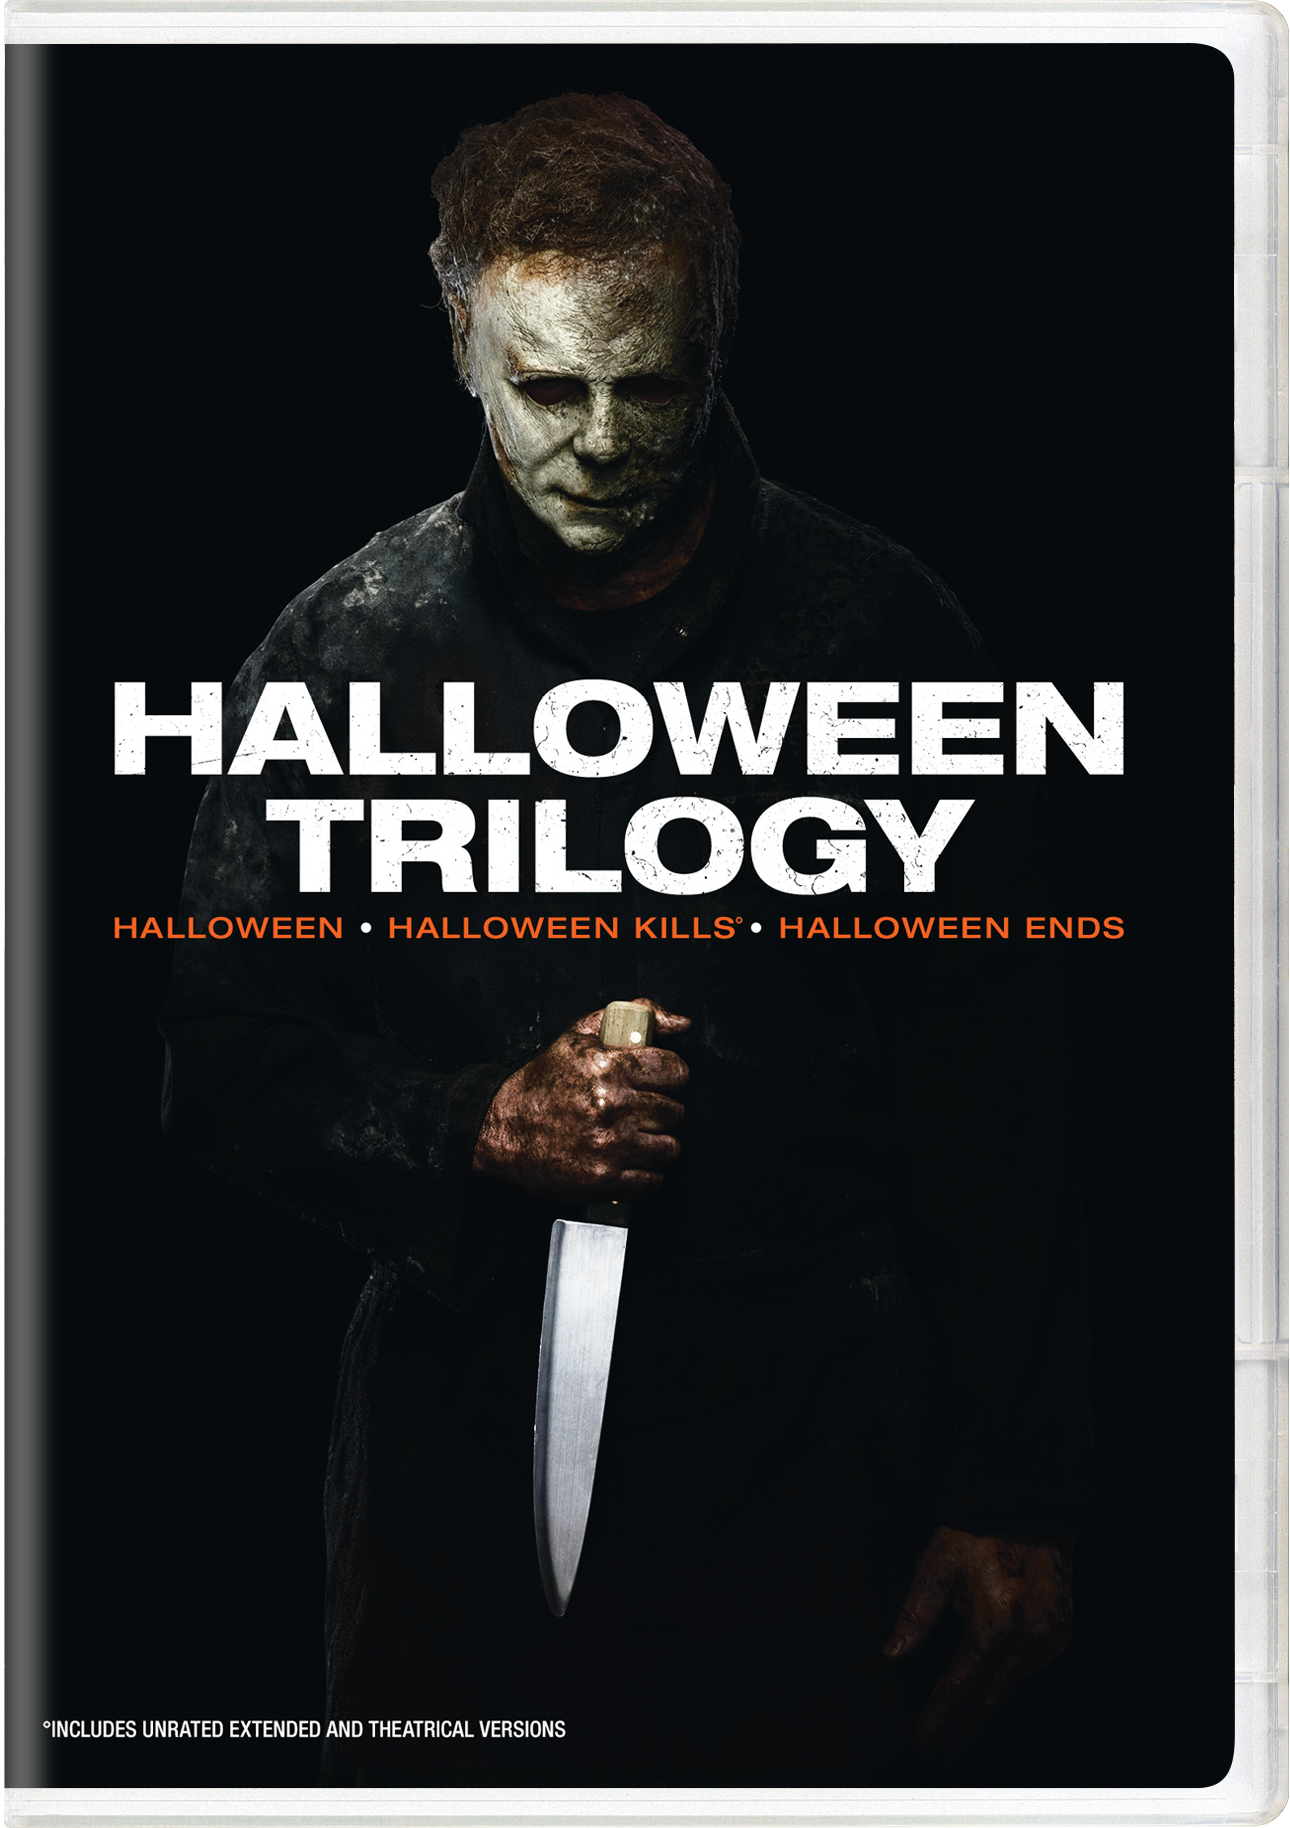 Halloween/Halloween Kills/Halloween Ends (Box Set) - DVD   - Horror Movies On DVD - Movies On GRUV